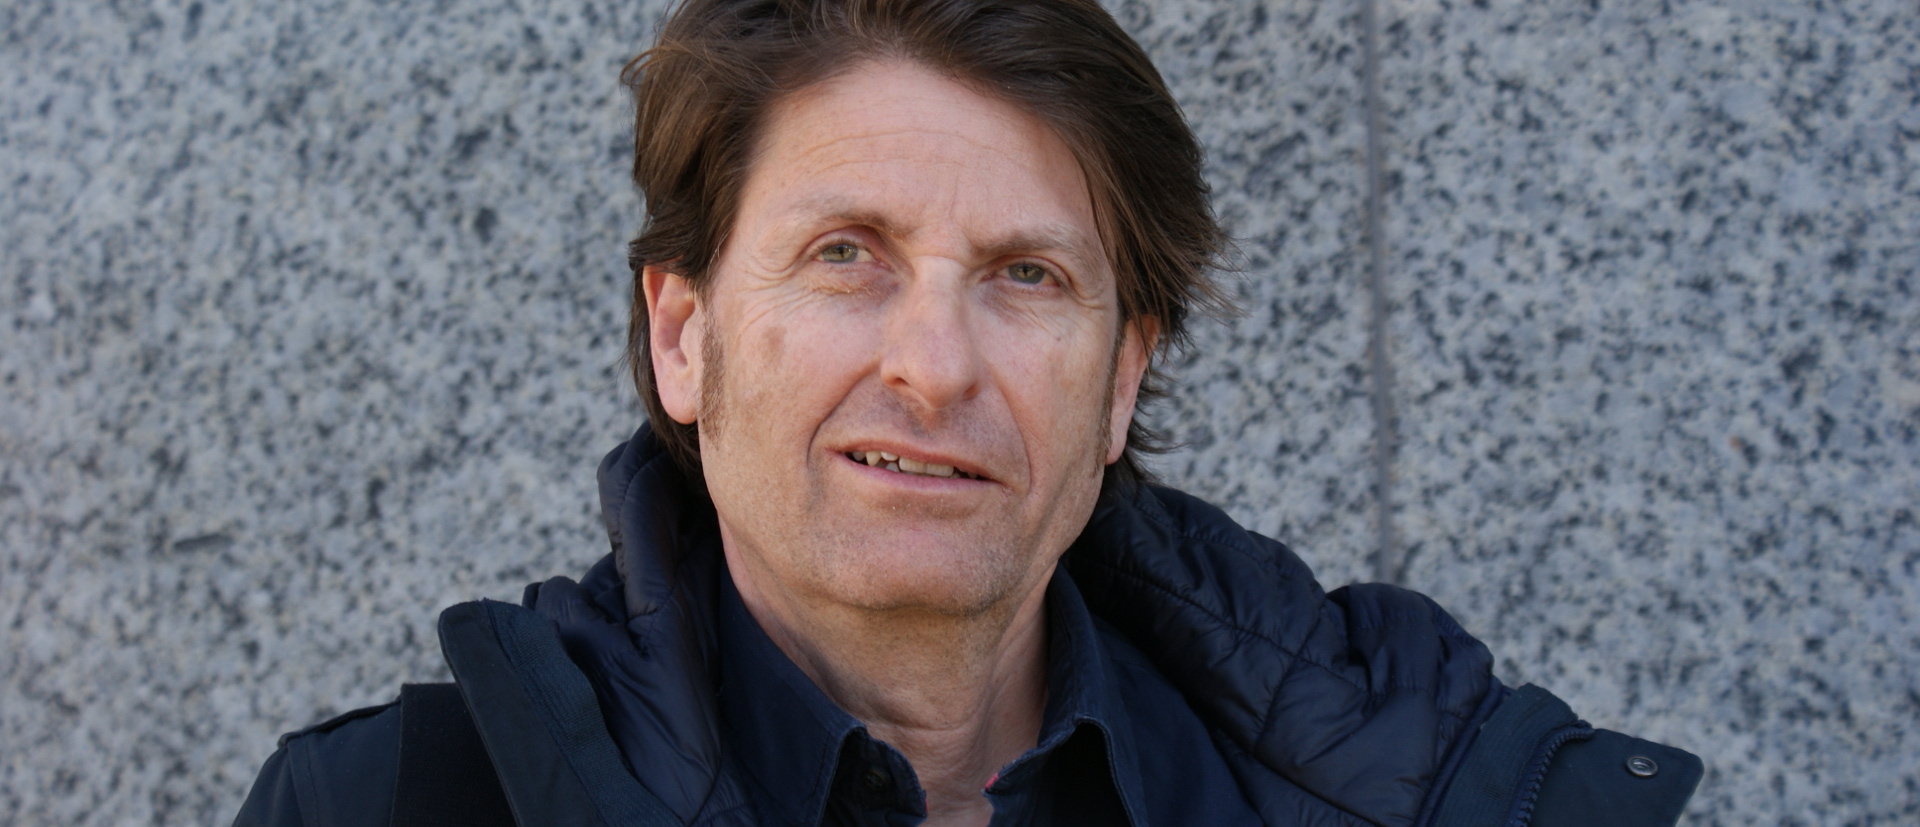 Festivaldirektor Michel Rappaport